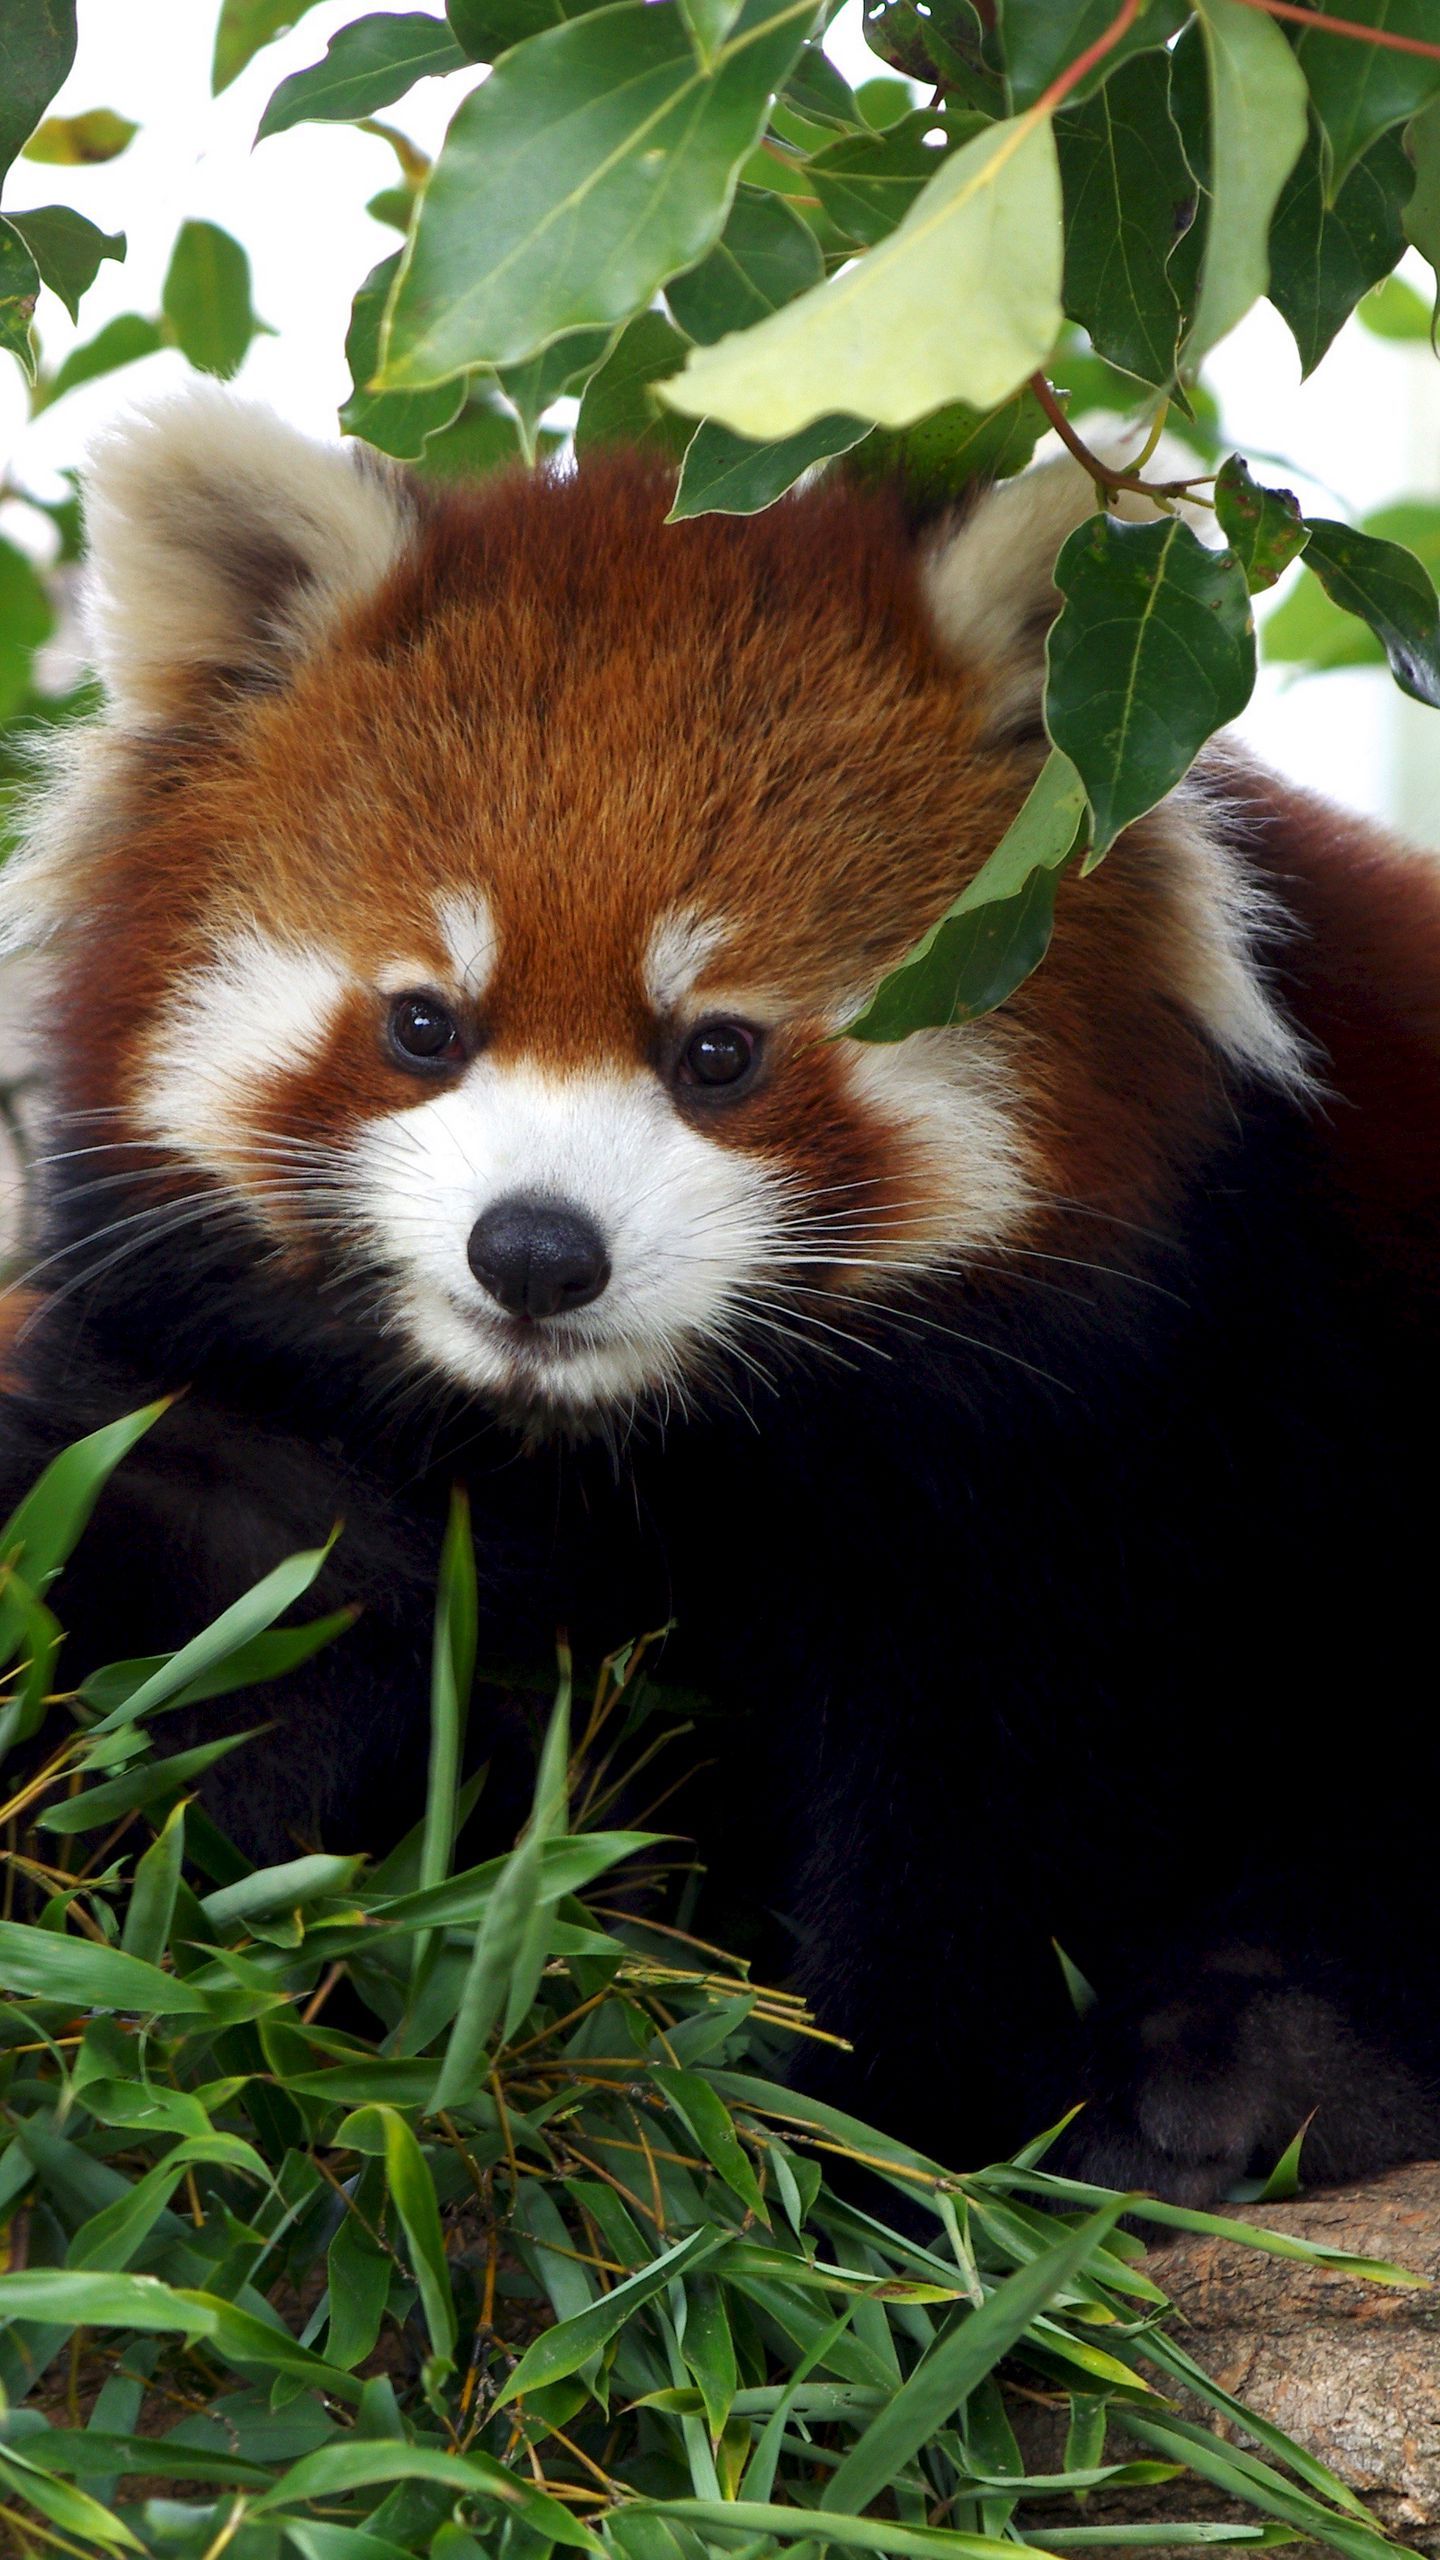 Download wallpaper 1440x2560 red panda, cute, bamboo, grass qhd samsung galaxy s s edge, note, lg g4 HD background